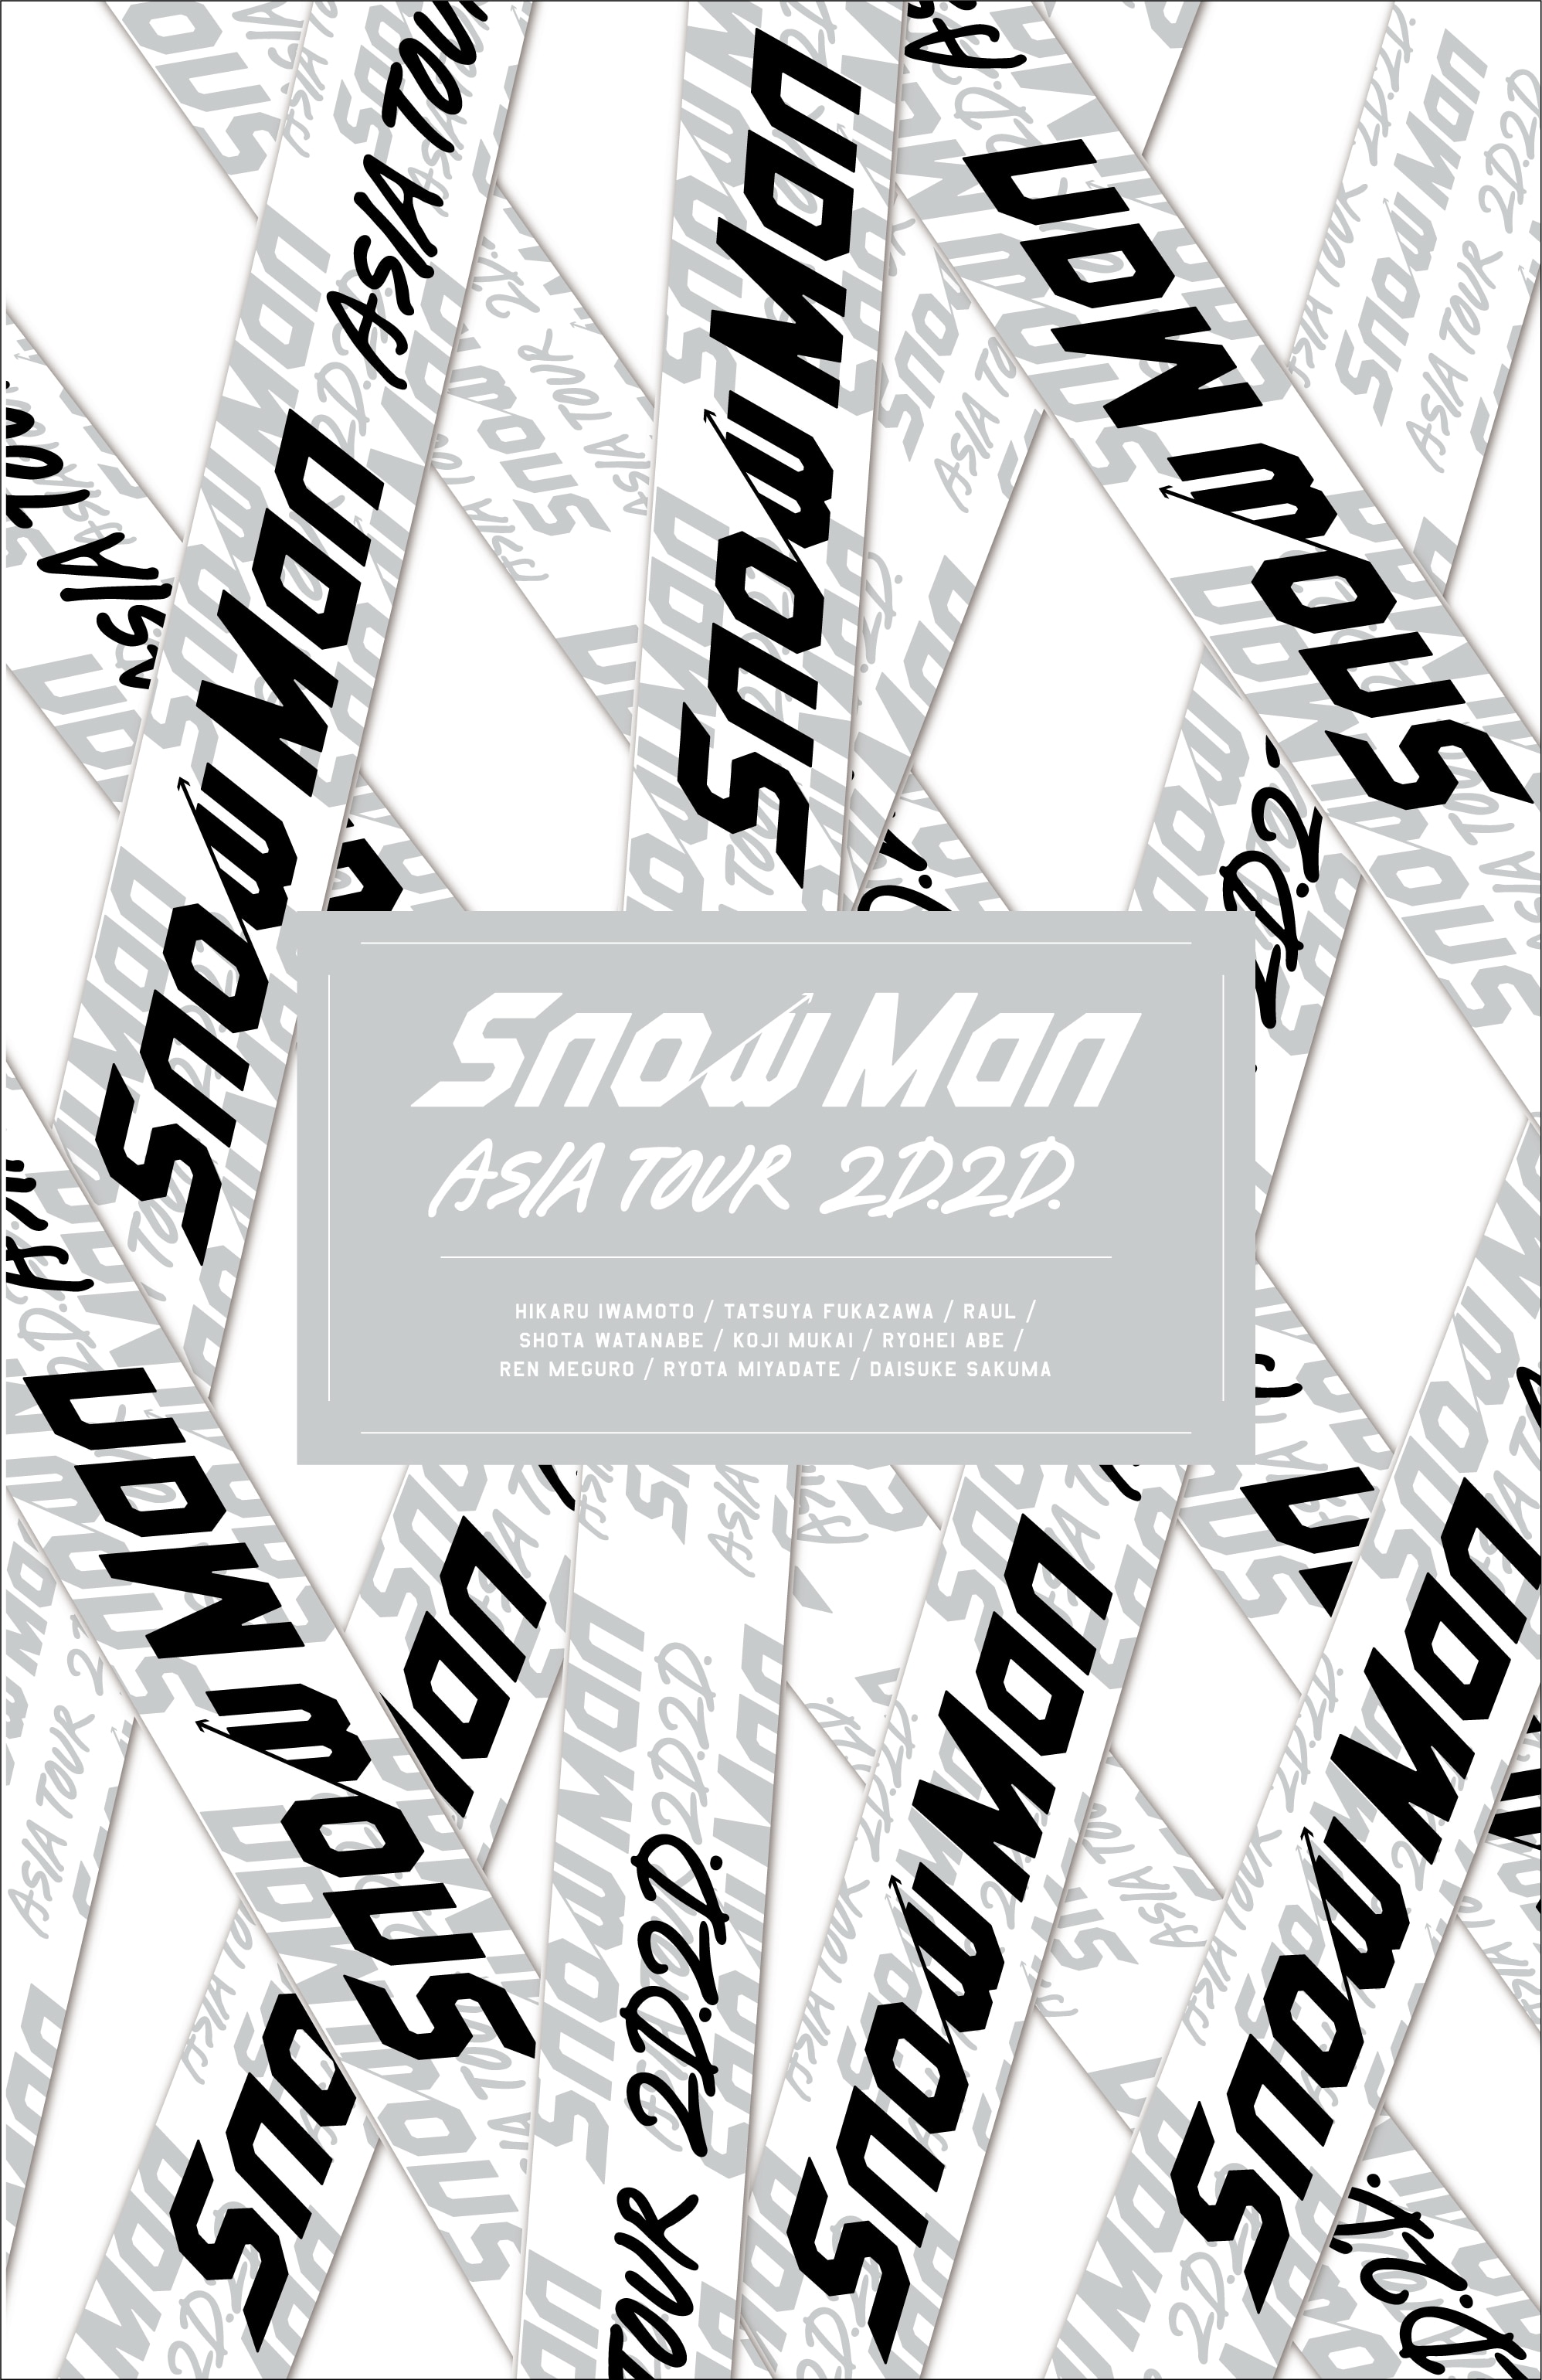 LIVE DVD&Blu-ray 「Snow Man ASIA TOUR 2D.2D.」 - DISC | Snow Man ...